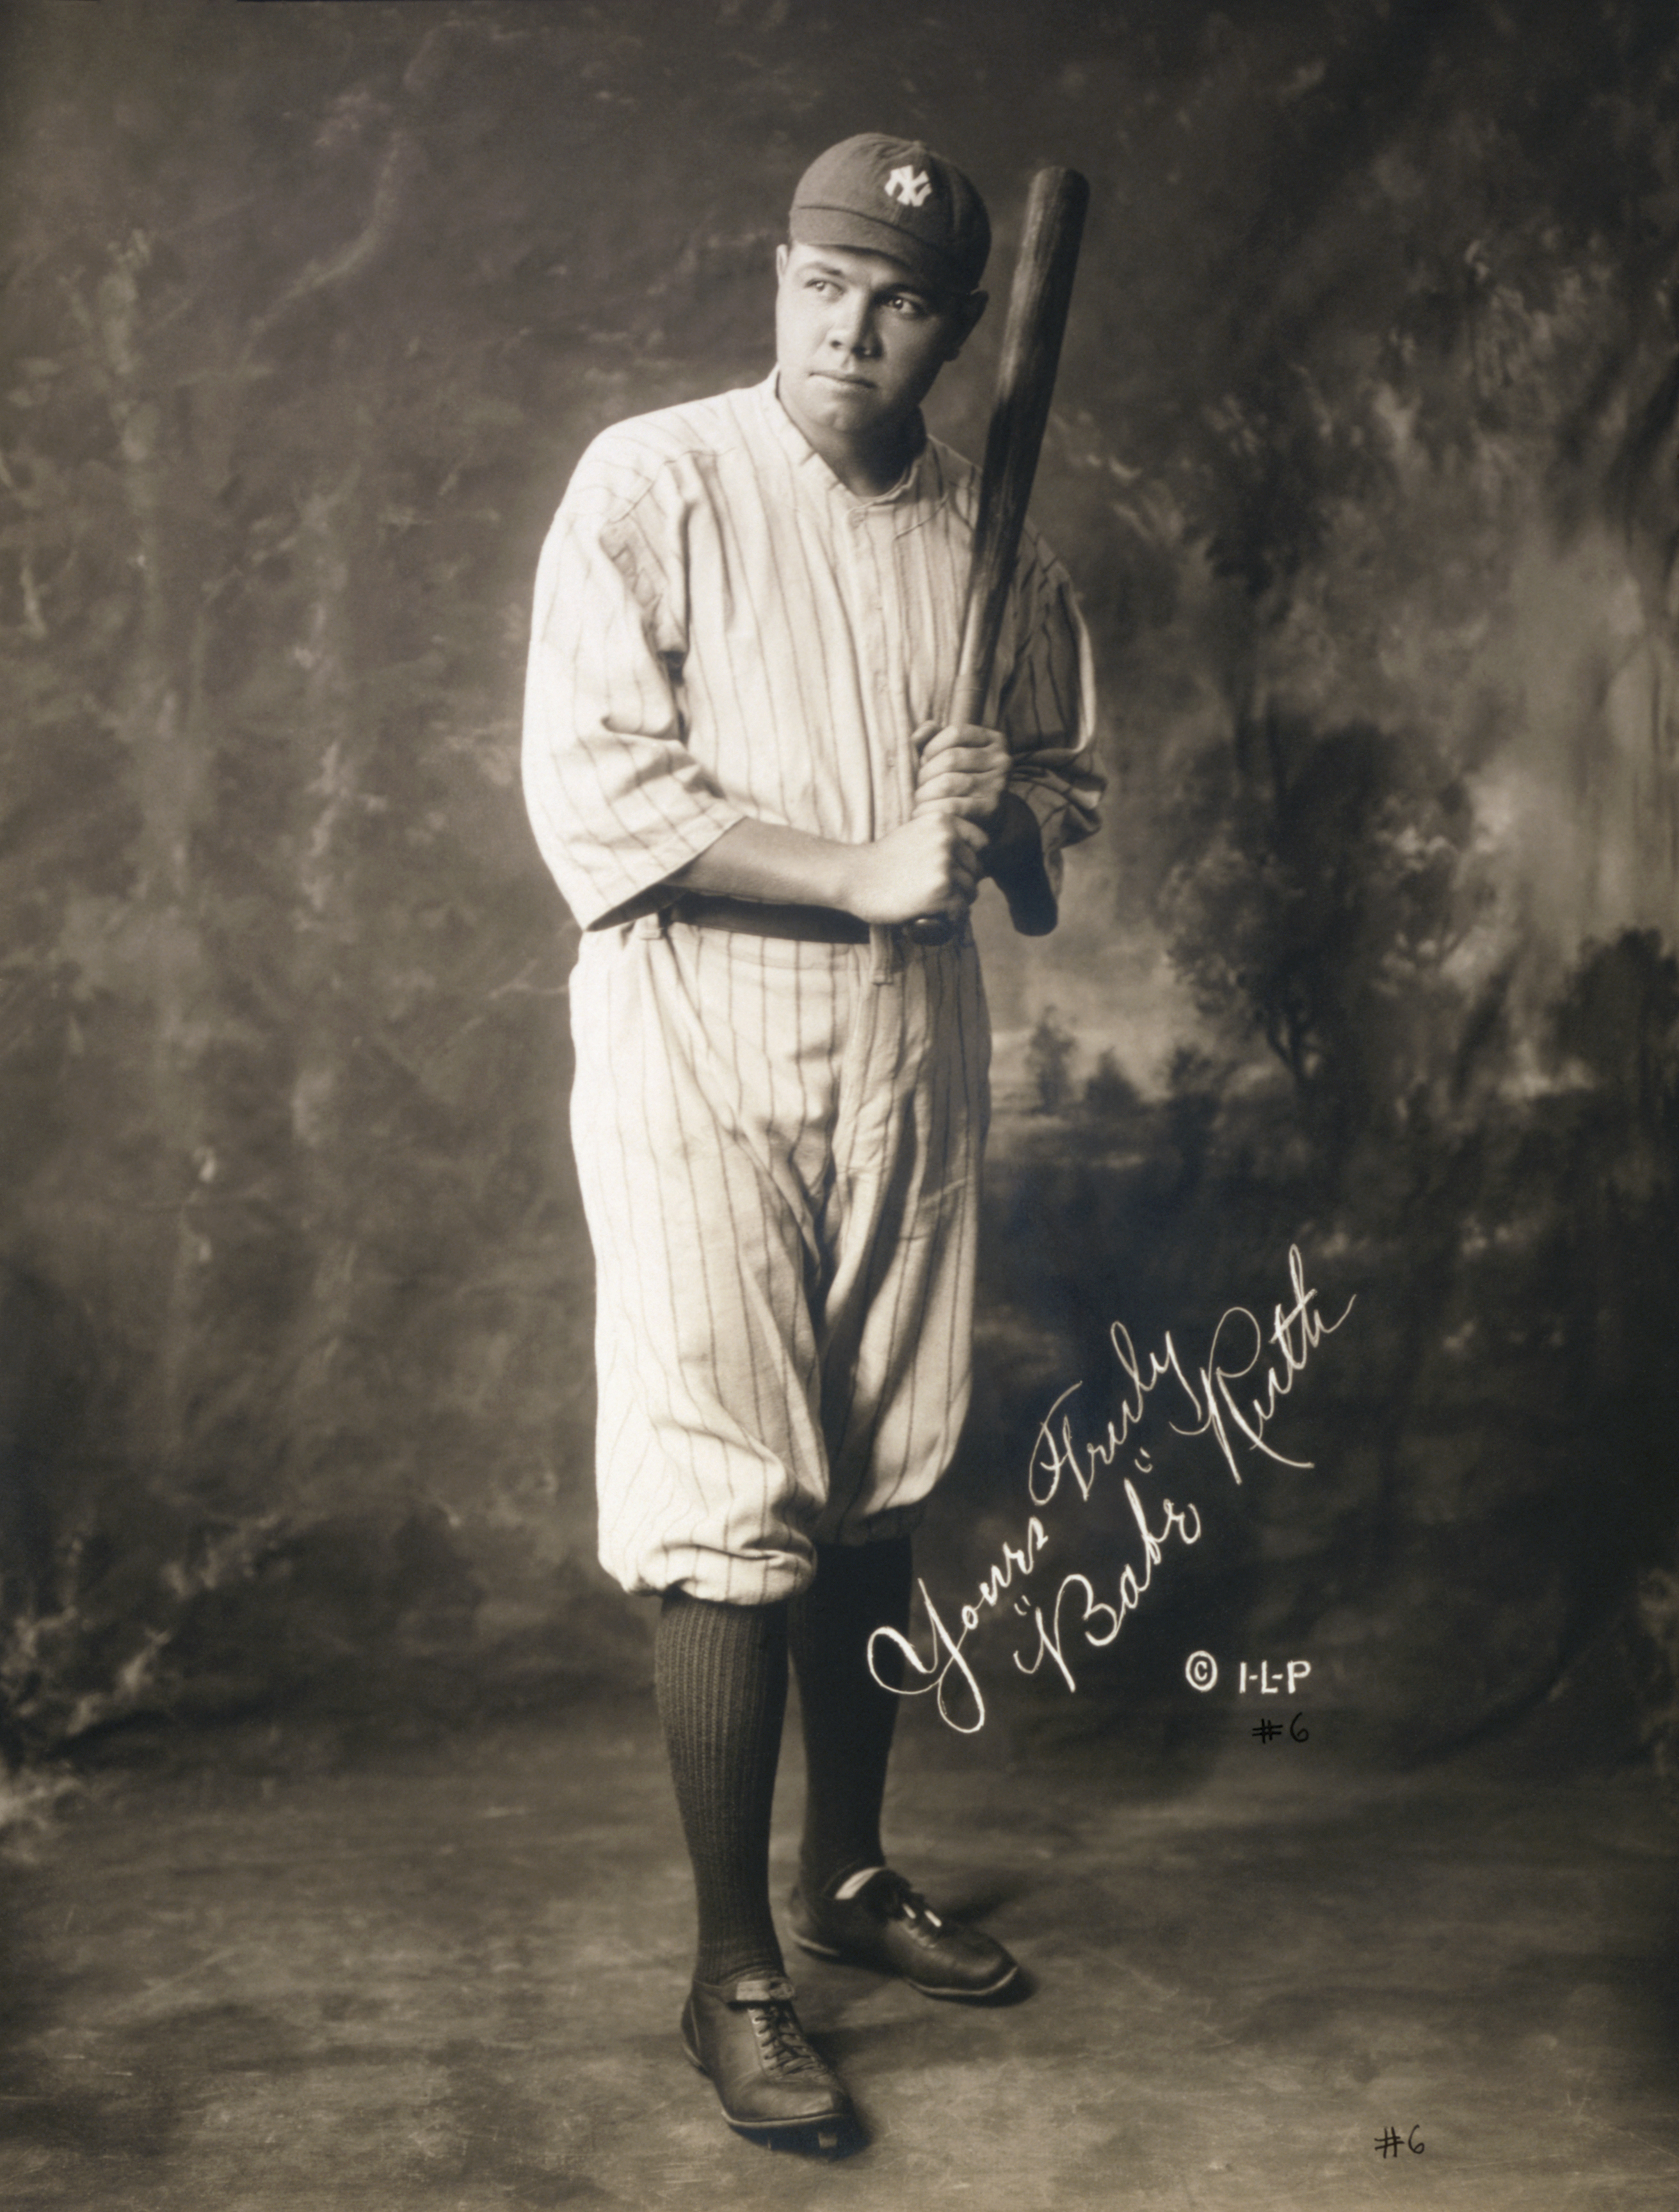  Biografie van Babe Ruth